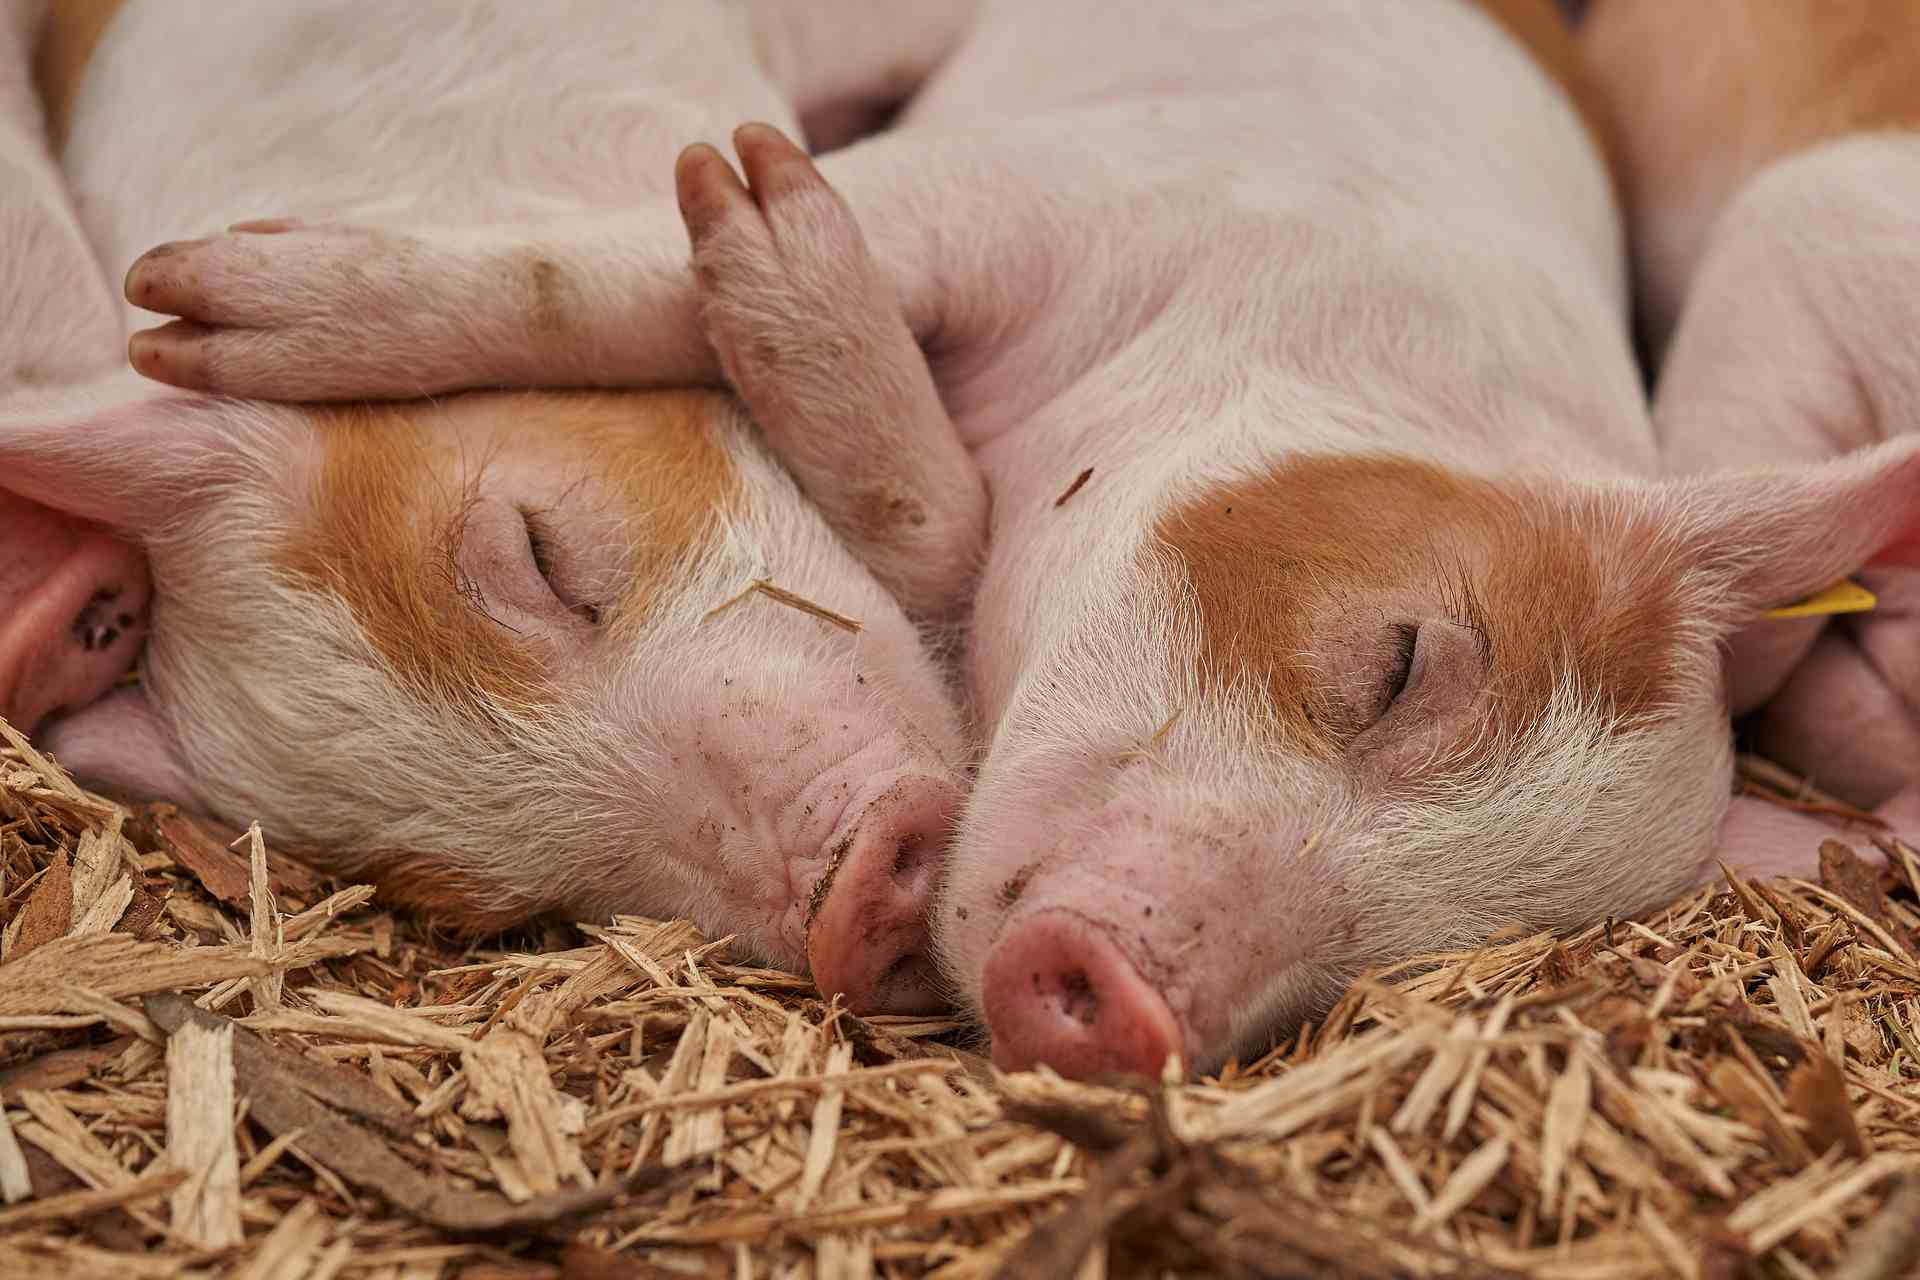 Piglets cuddling during a nap.